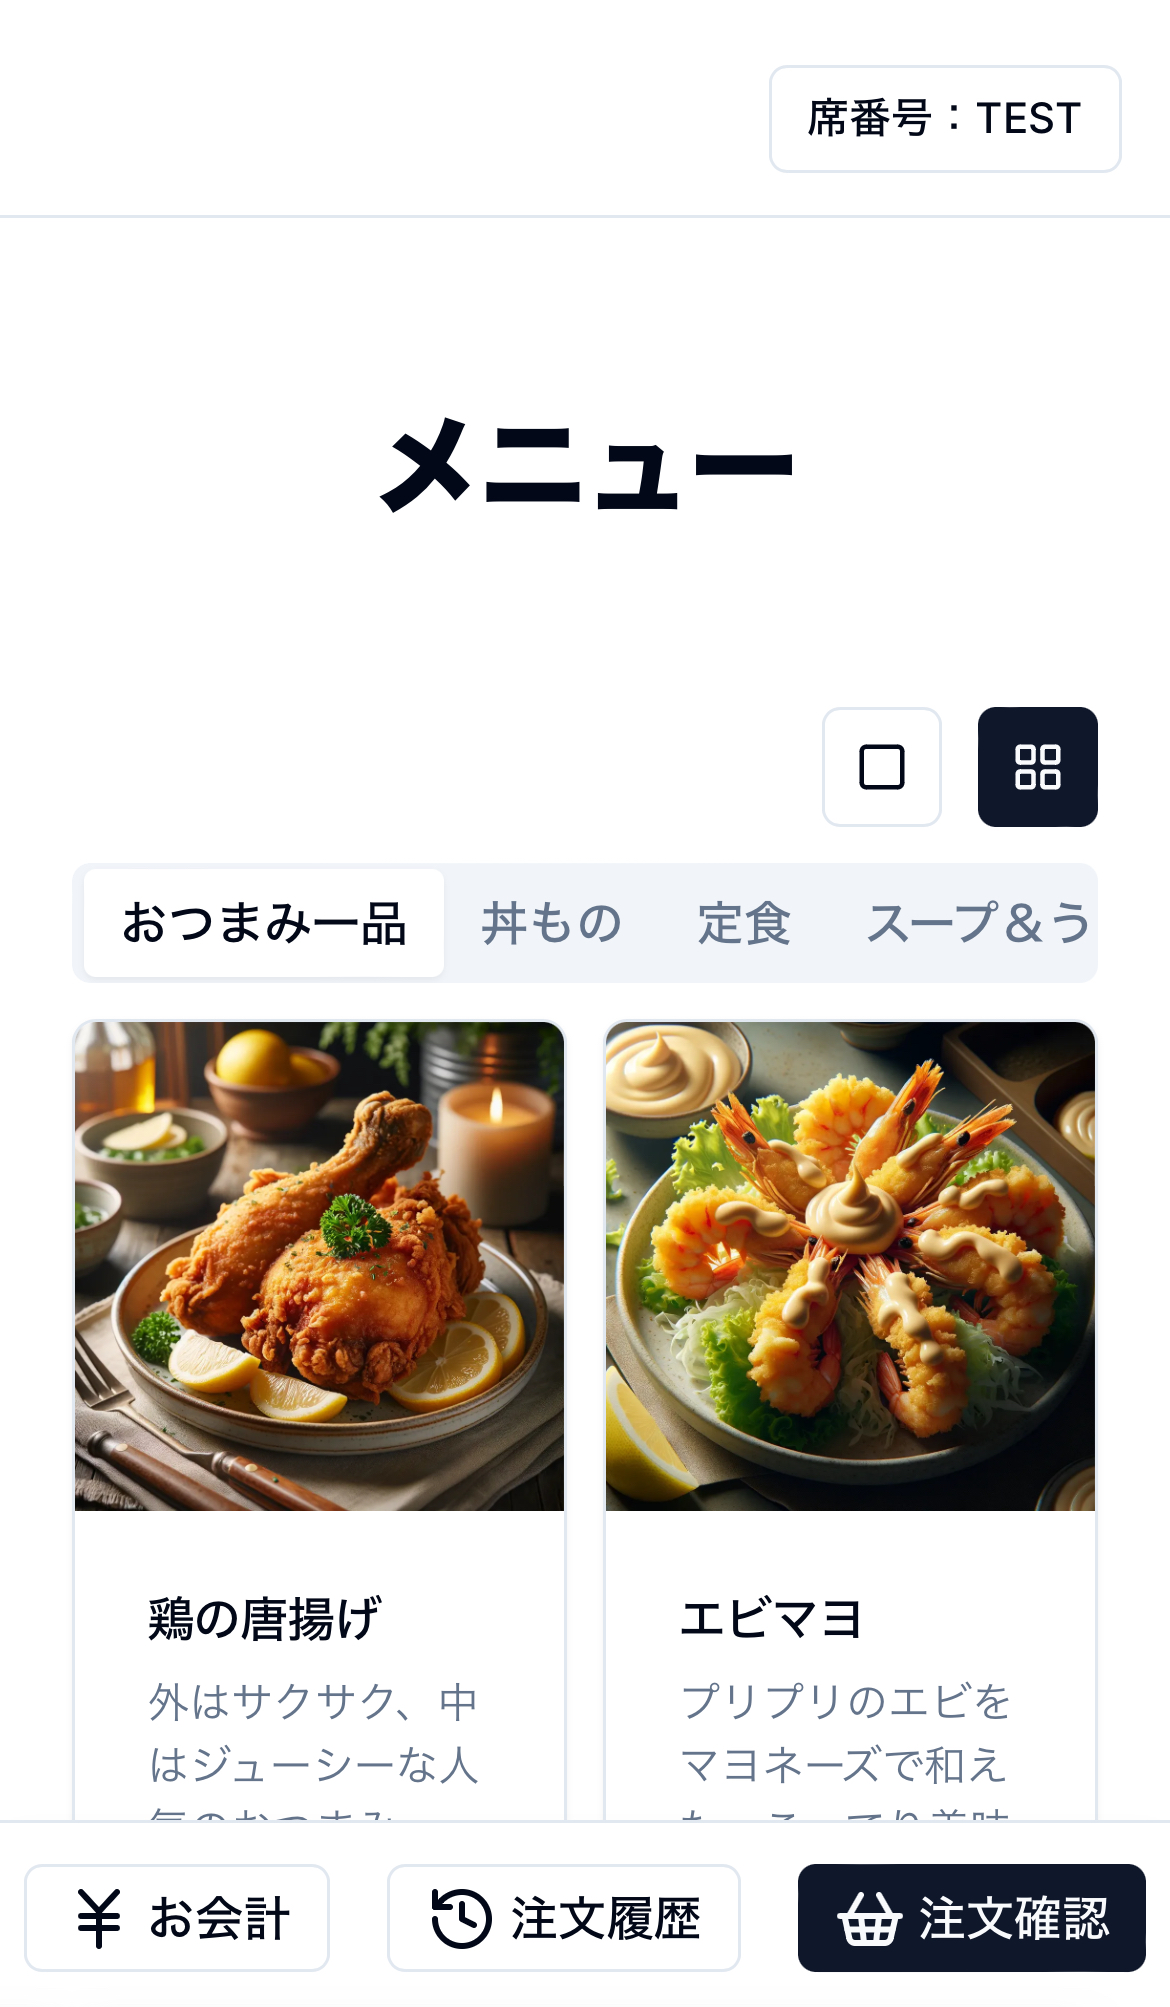 Preview image of Napori Mobile Order Service